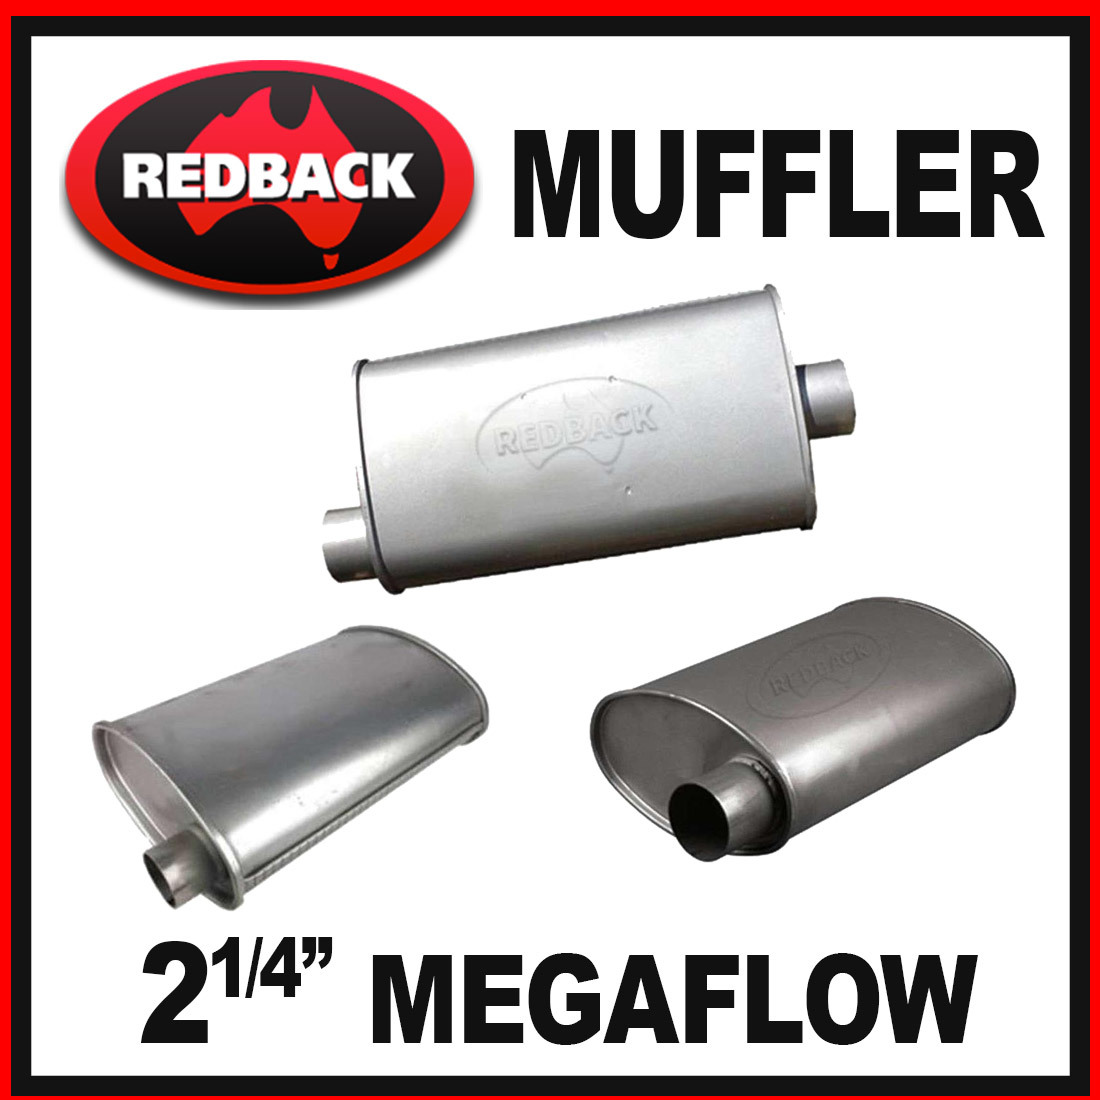 Redback 2 1/4" Megaflow Muffler image